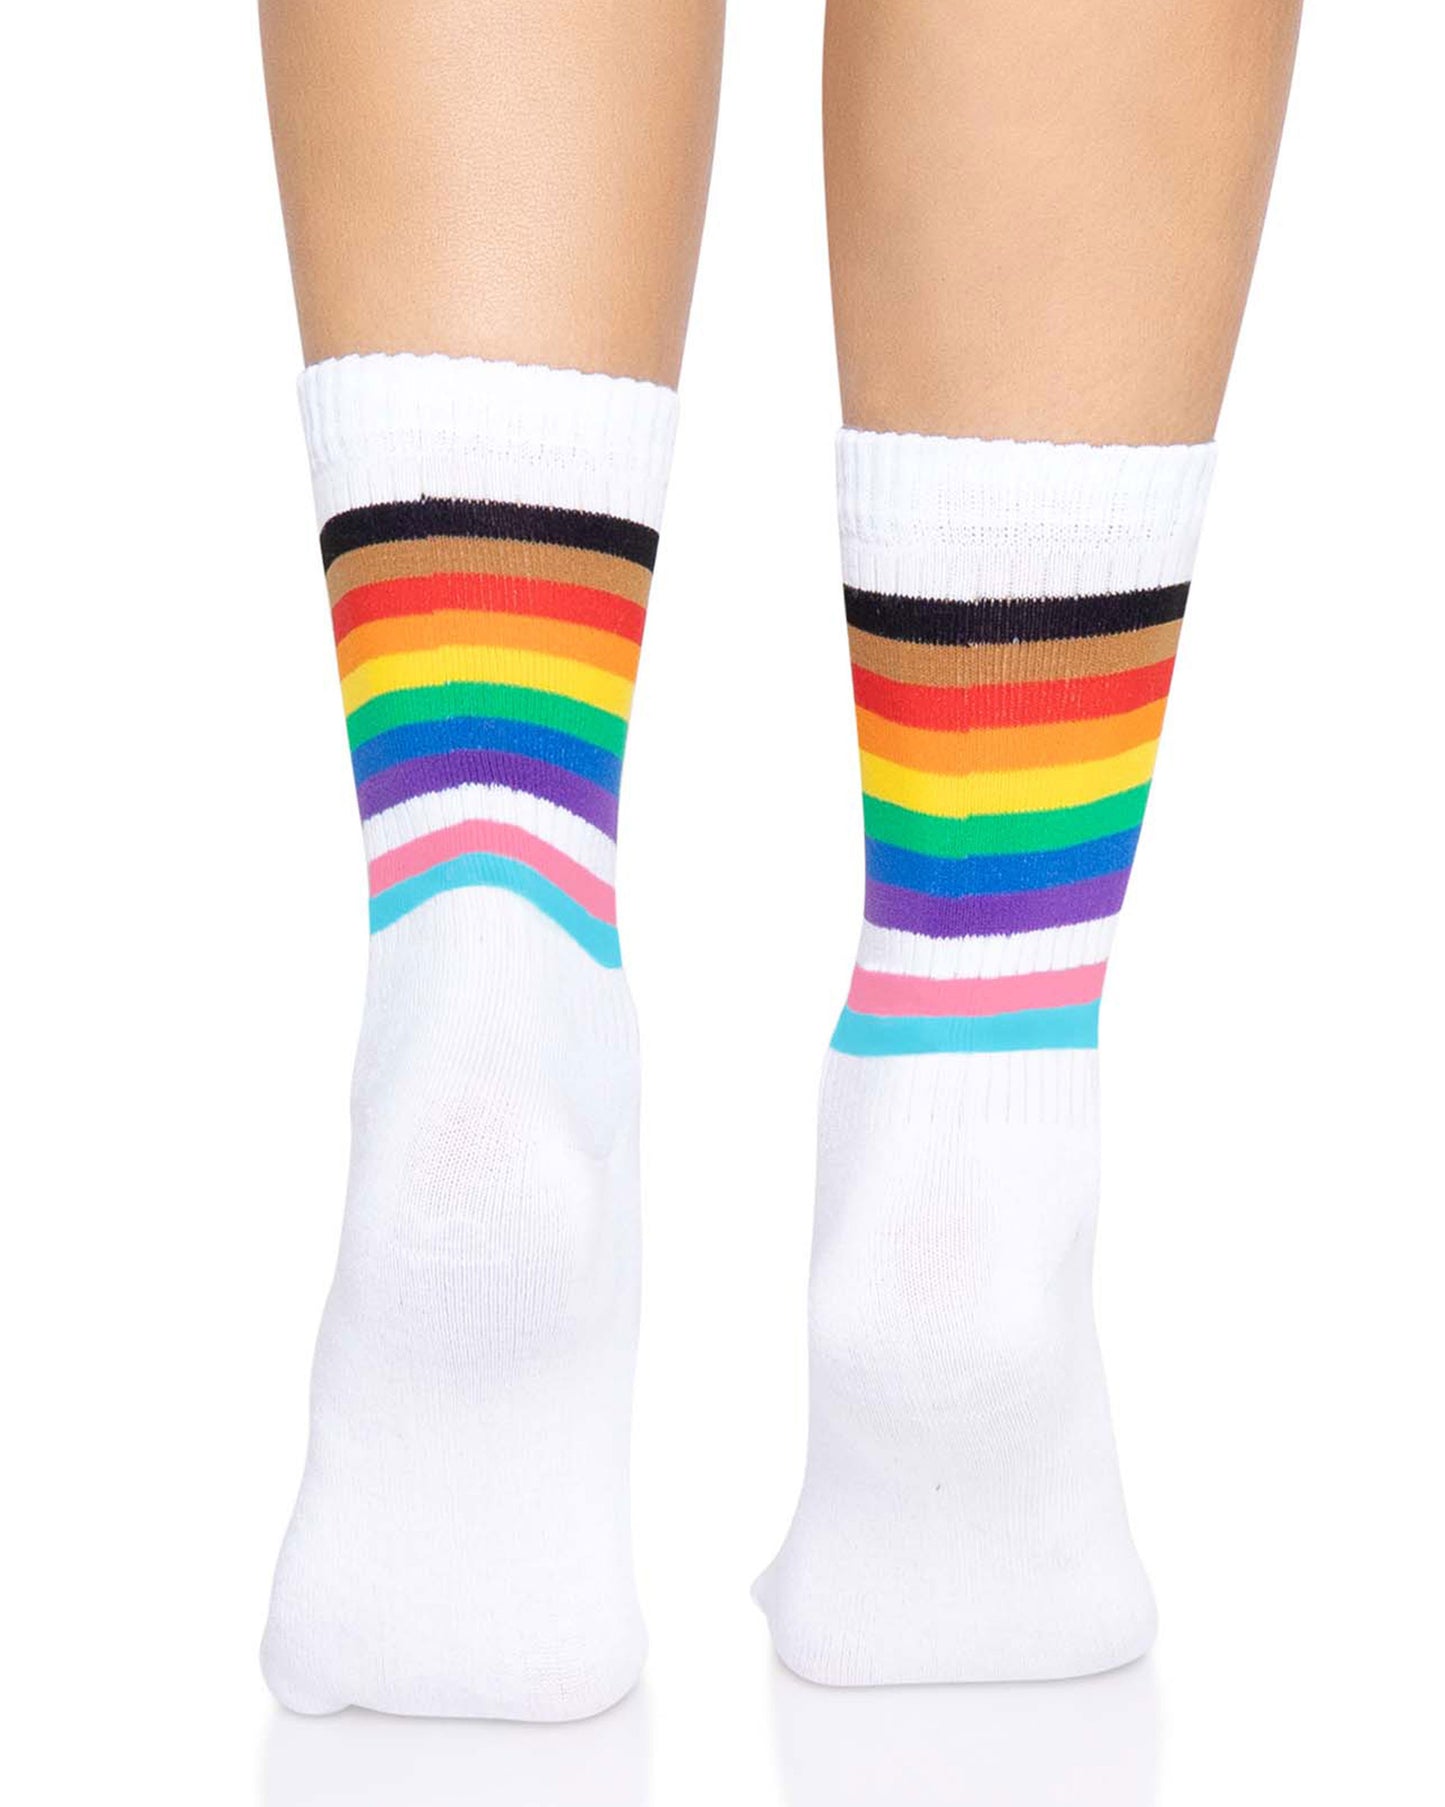 Leg Avenue 3014 Pride Crew Socks - Back view white crew length socks with the pride rainbow flag striped cuff.